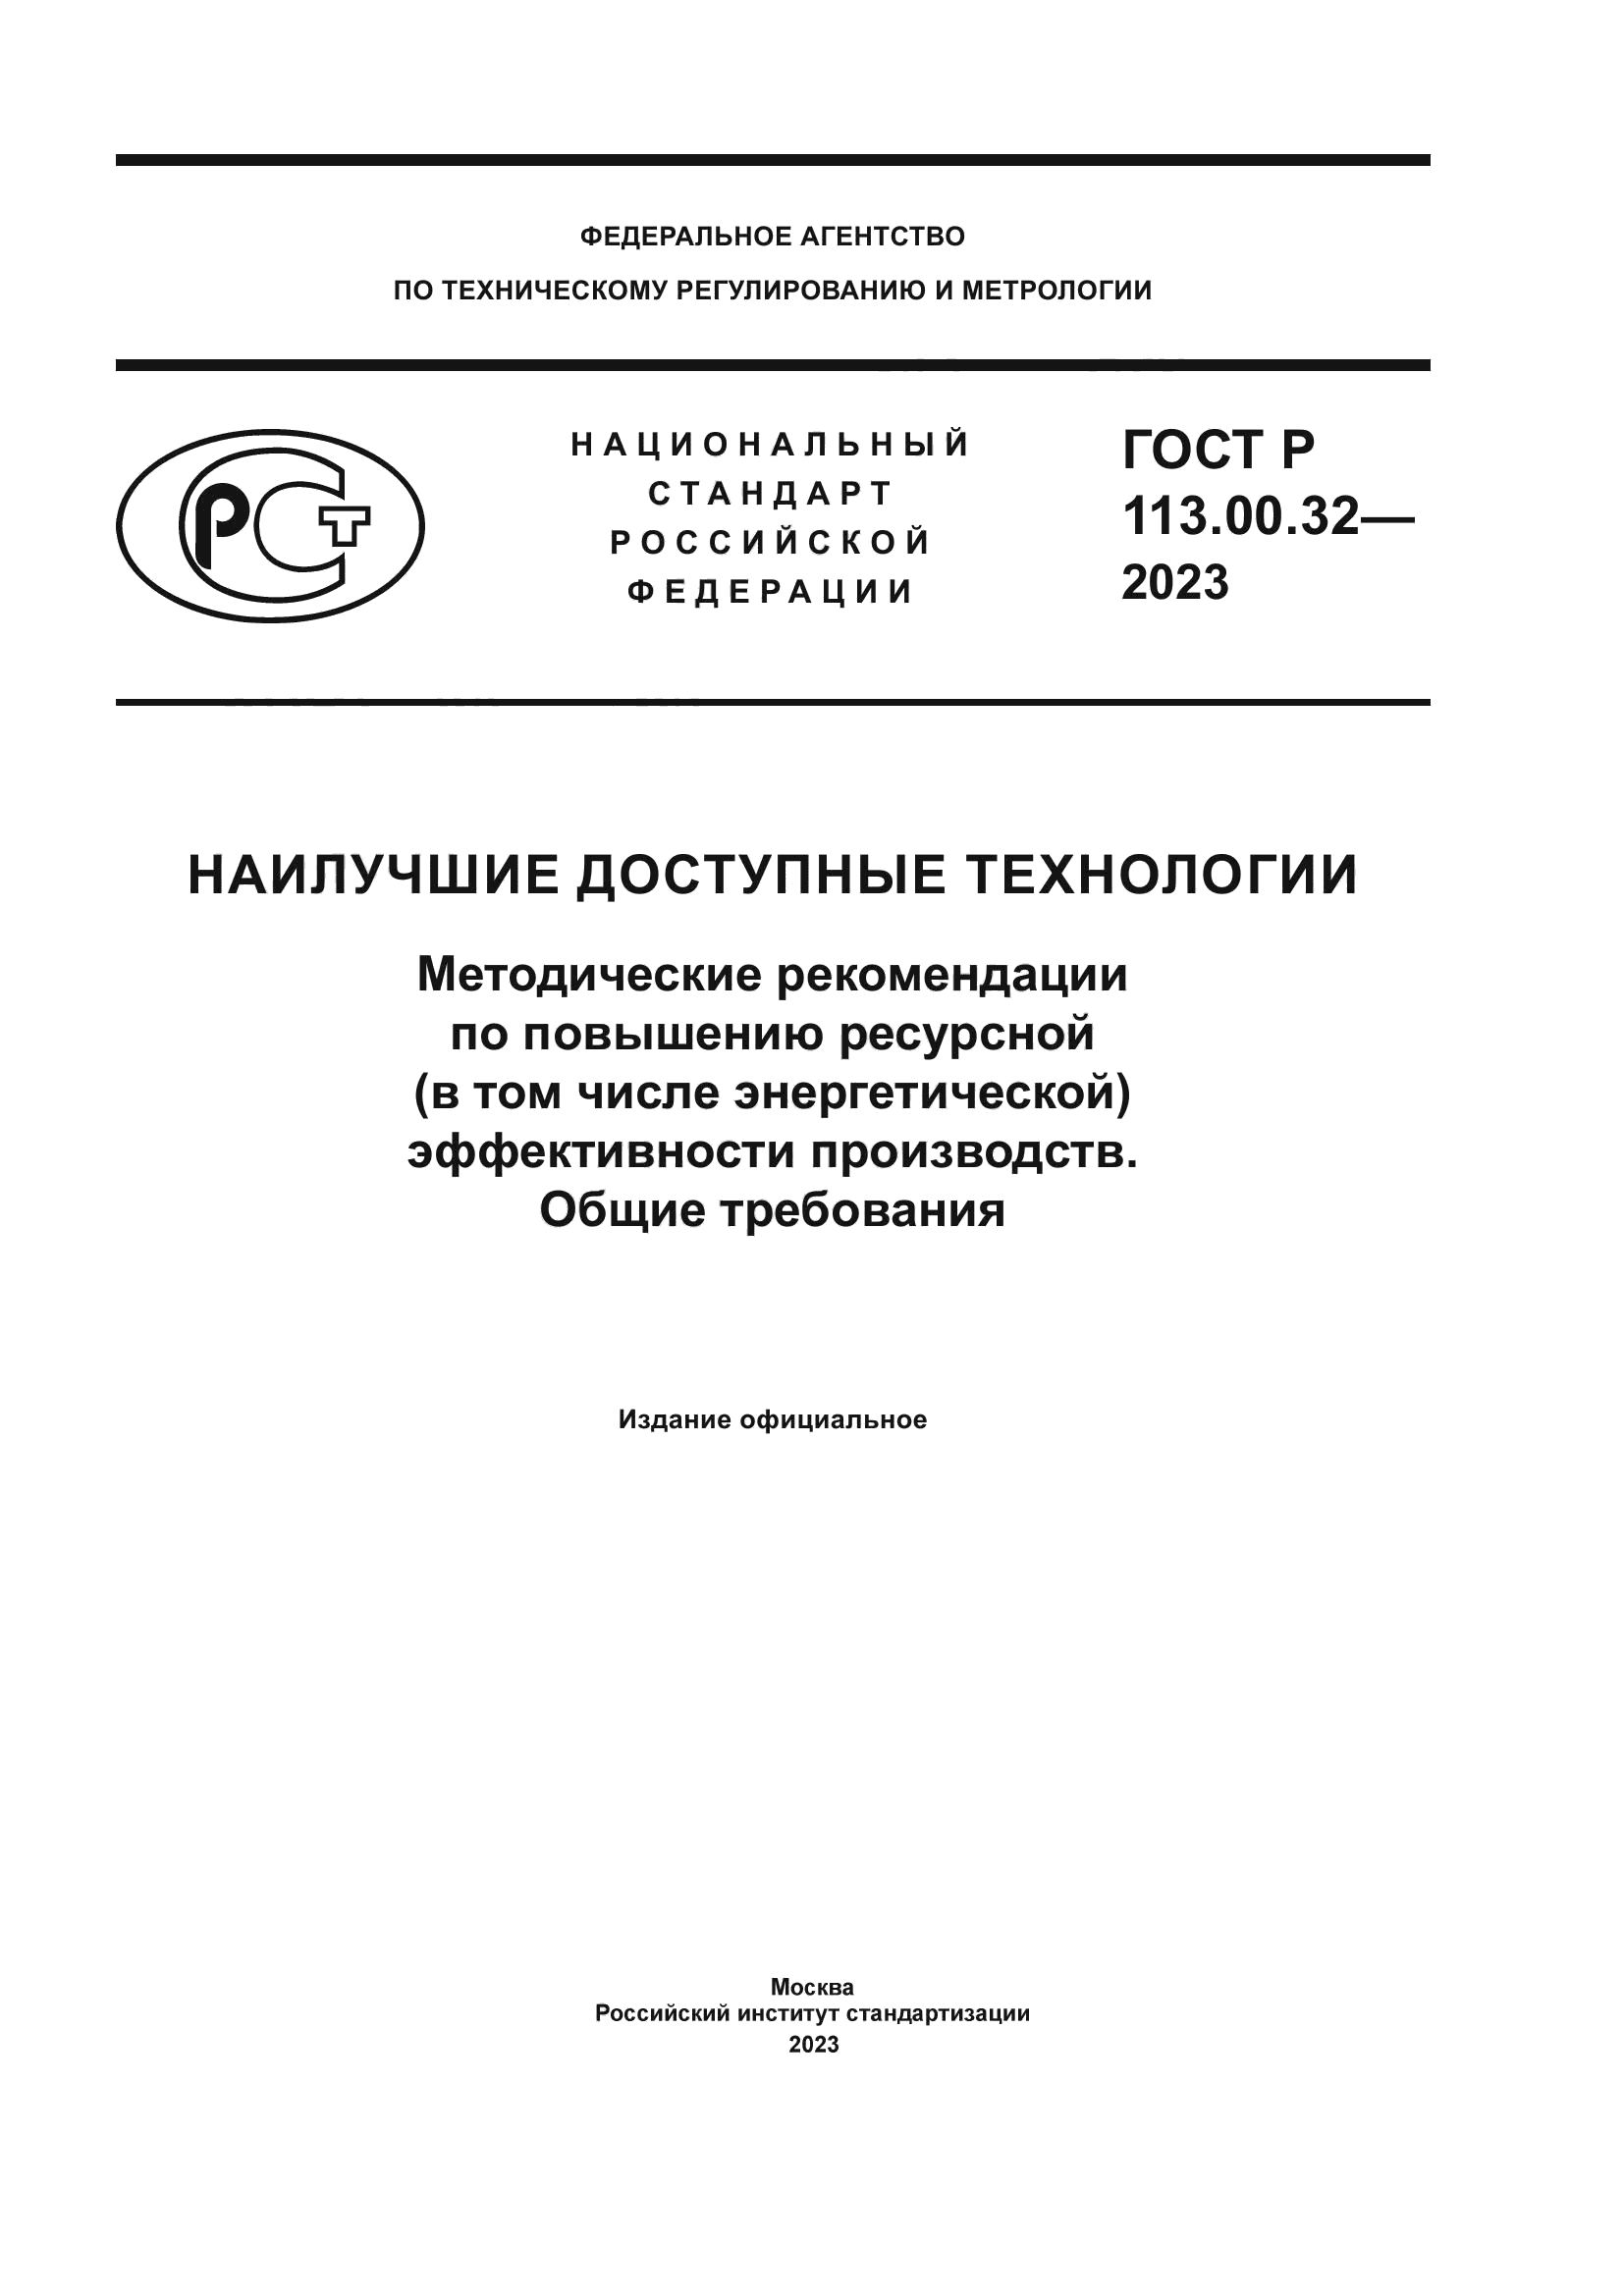 ГОСТ Р 113.00.32-2023